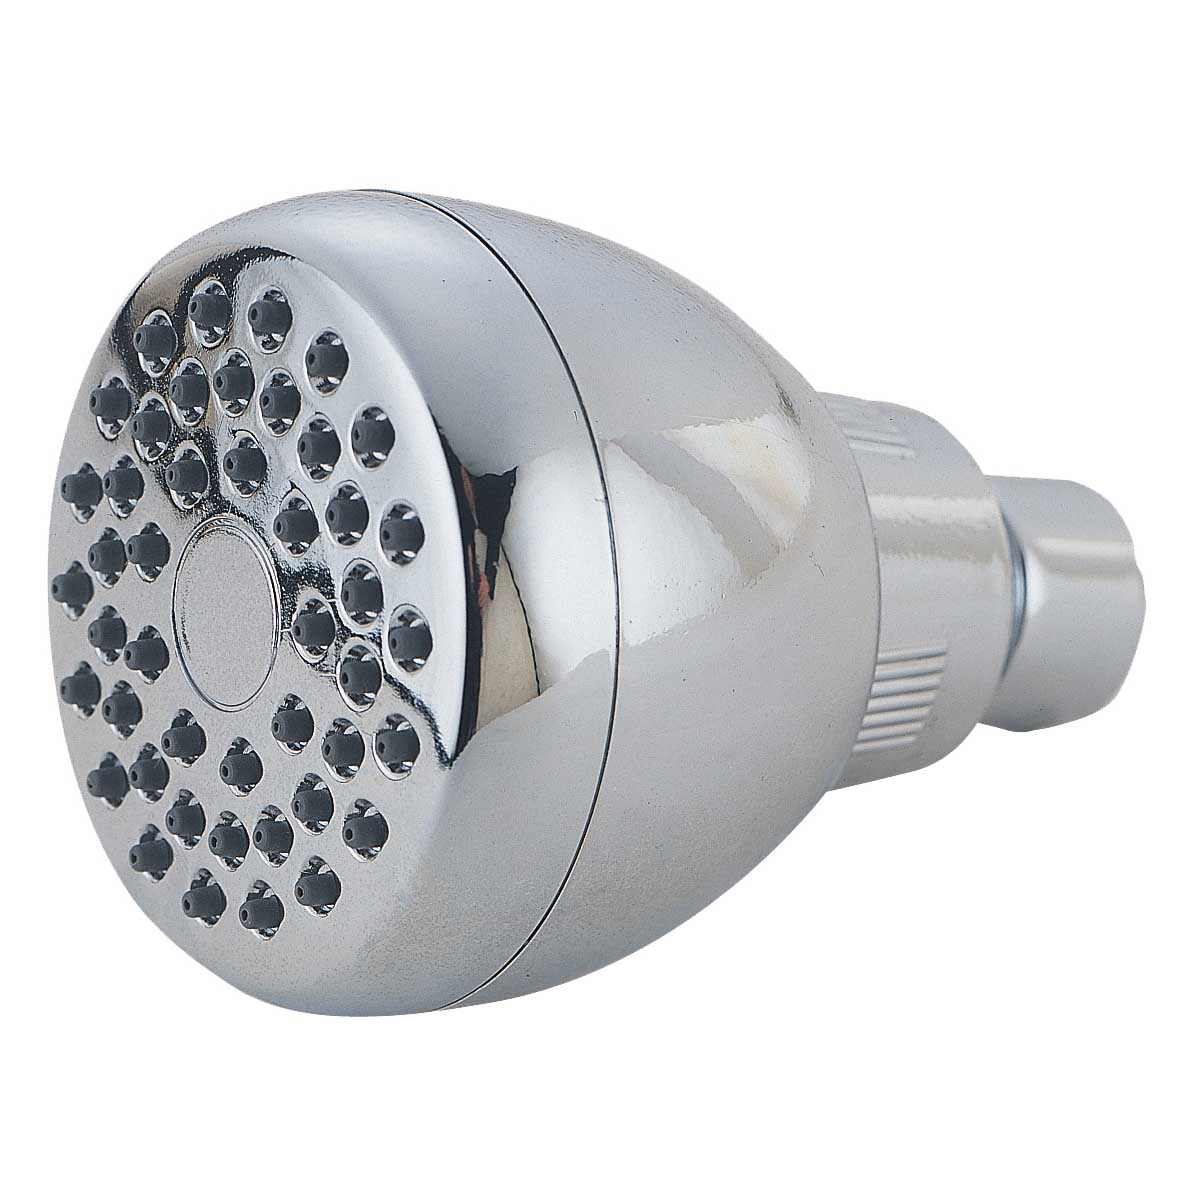 B11041CP Shower Head, 1.75 gpm, 1/2-14 NPT Connection, Threaded, 1-Spray Function, Plastic, Chrome